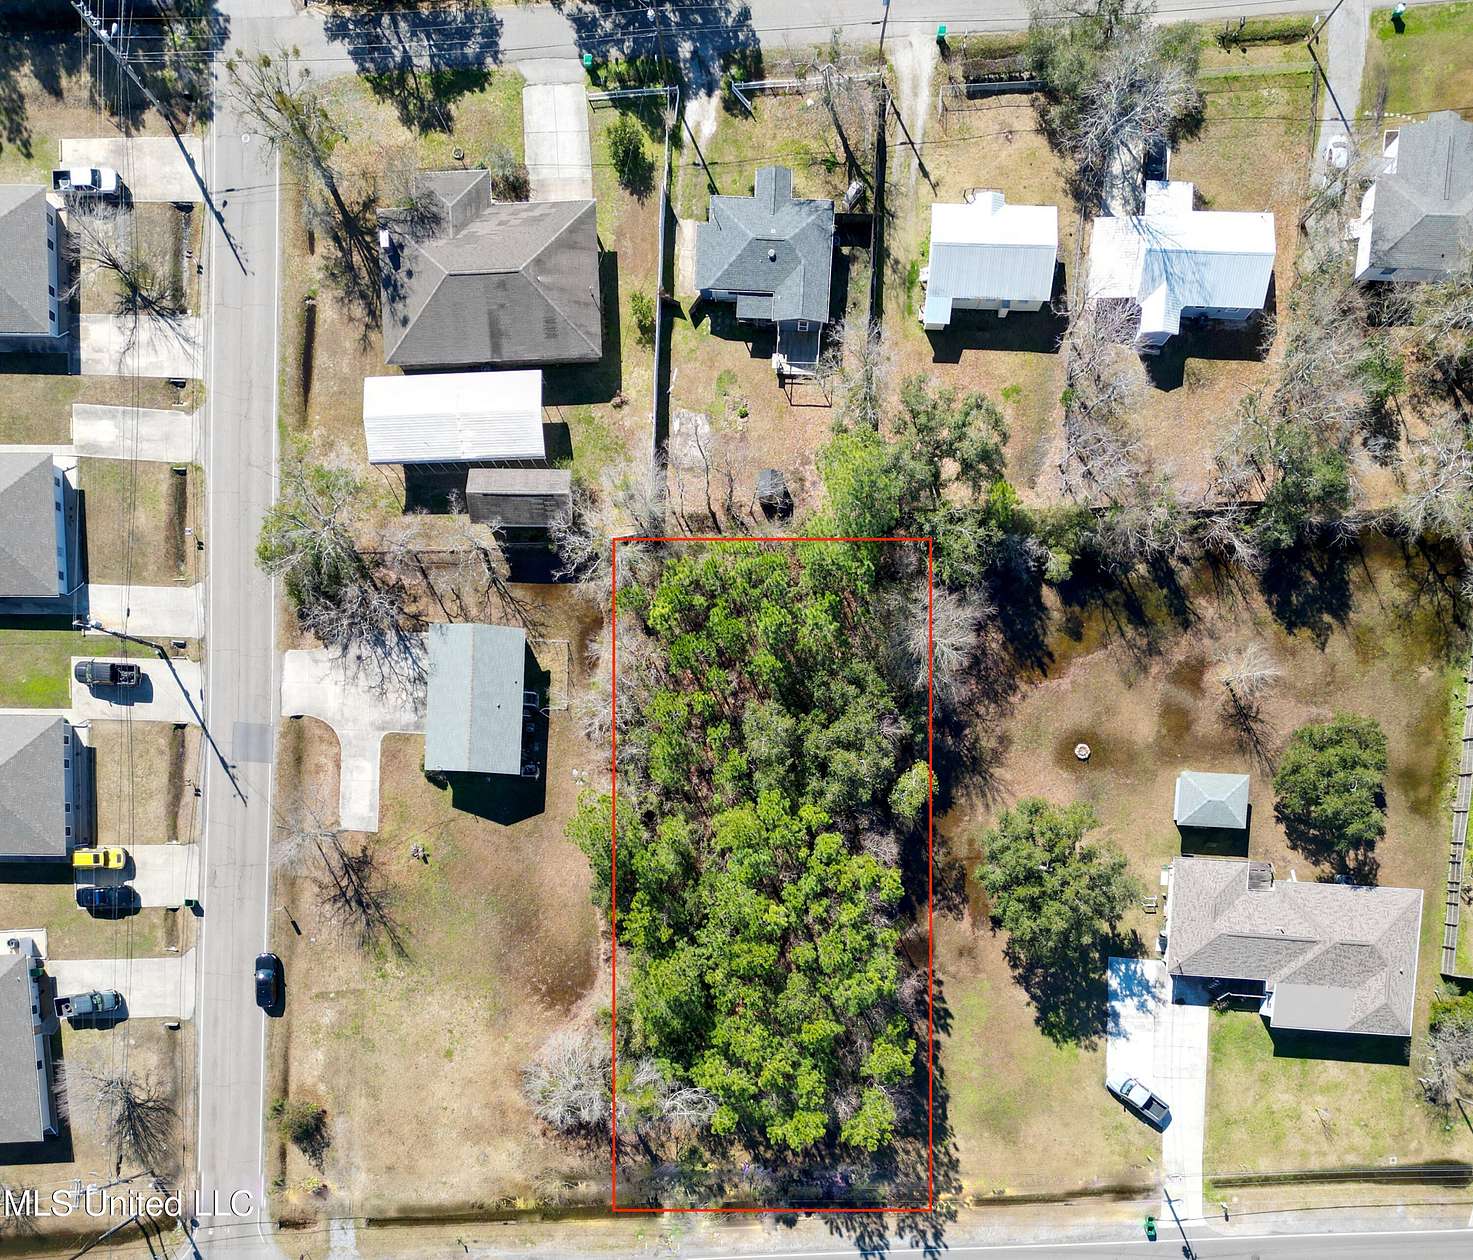 0.36 Acres of Residential Land for Sale in Waveland, Mississippi